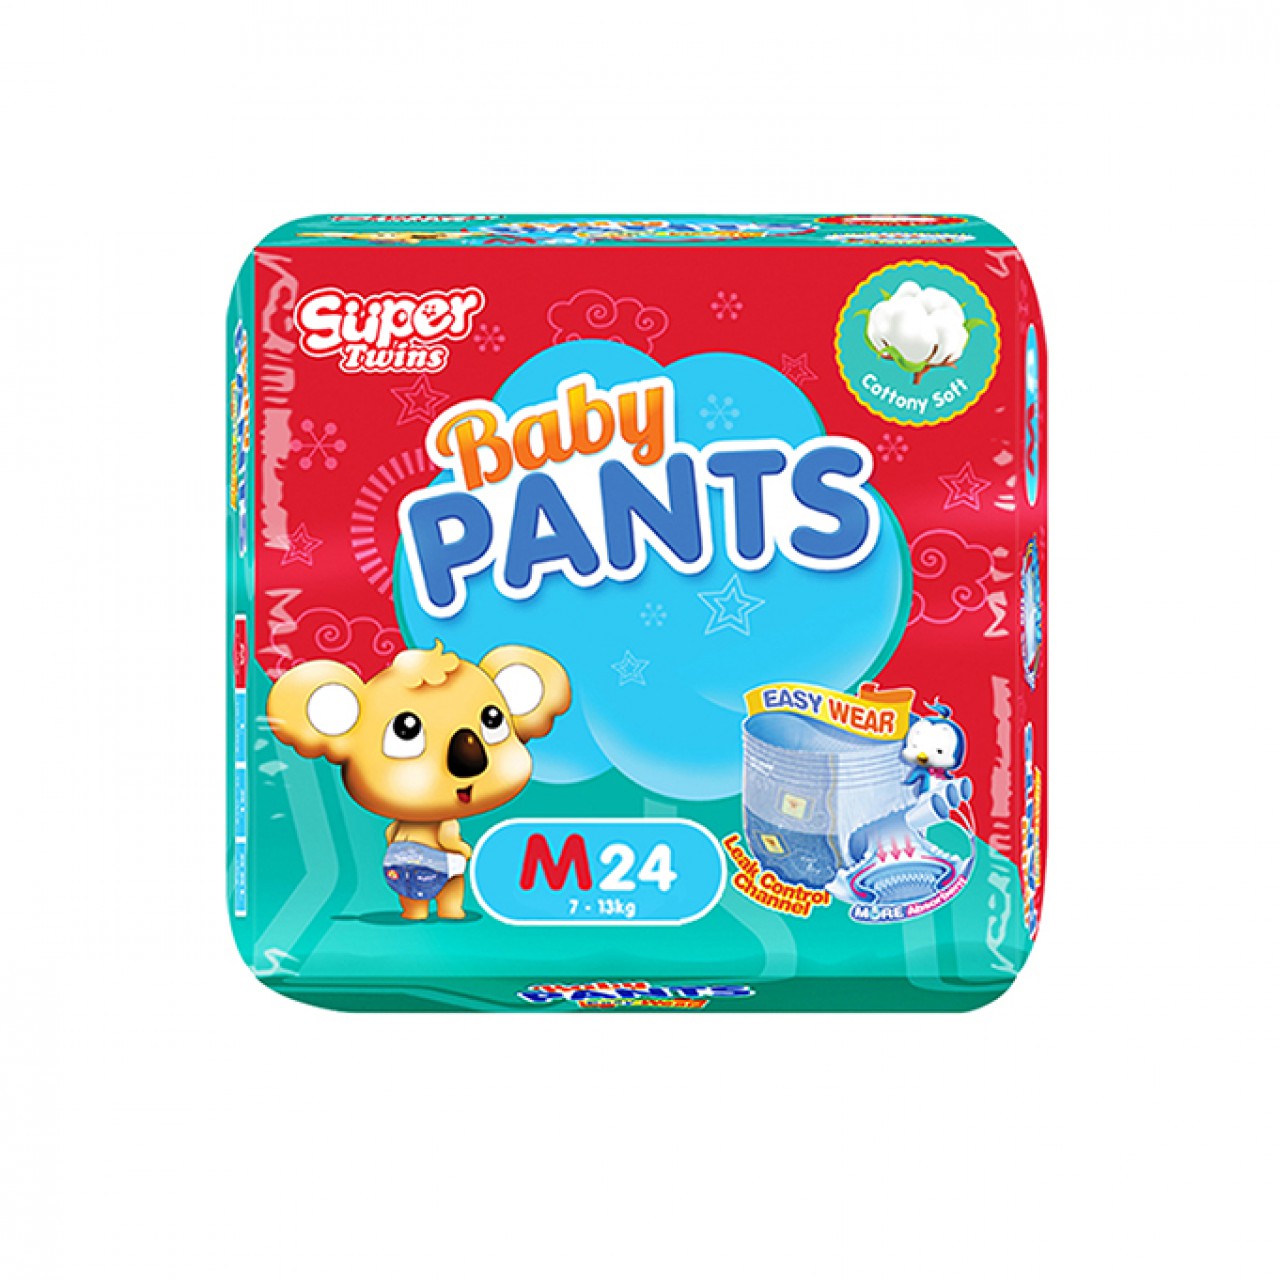 SUPER TWINS BABY PANTS M24